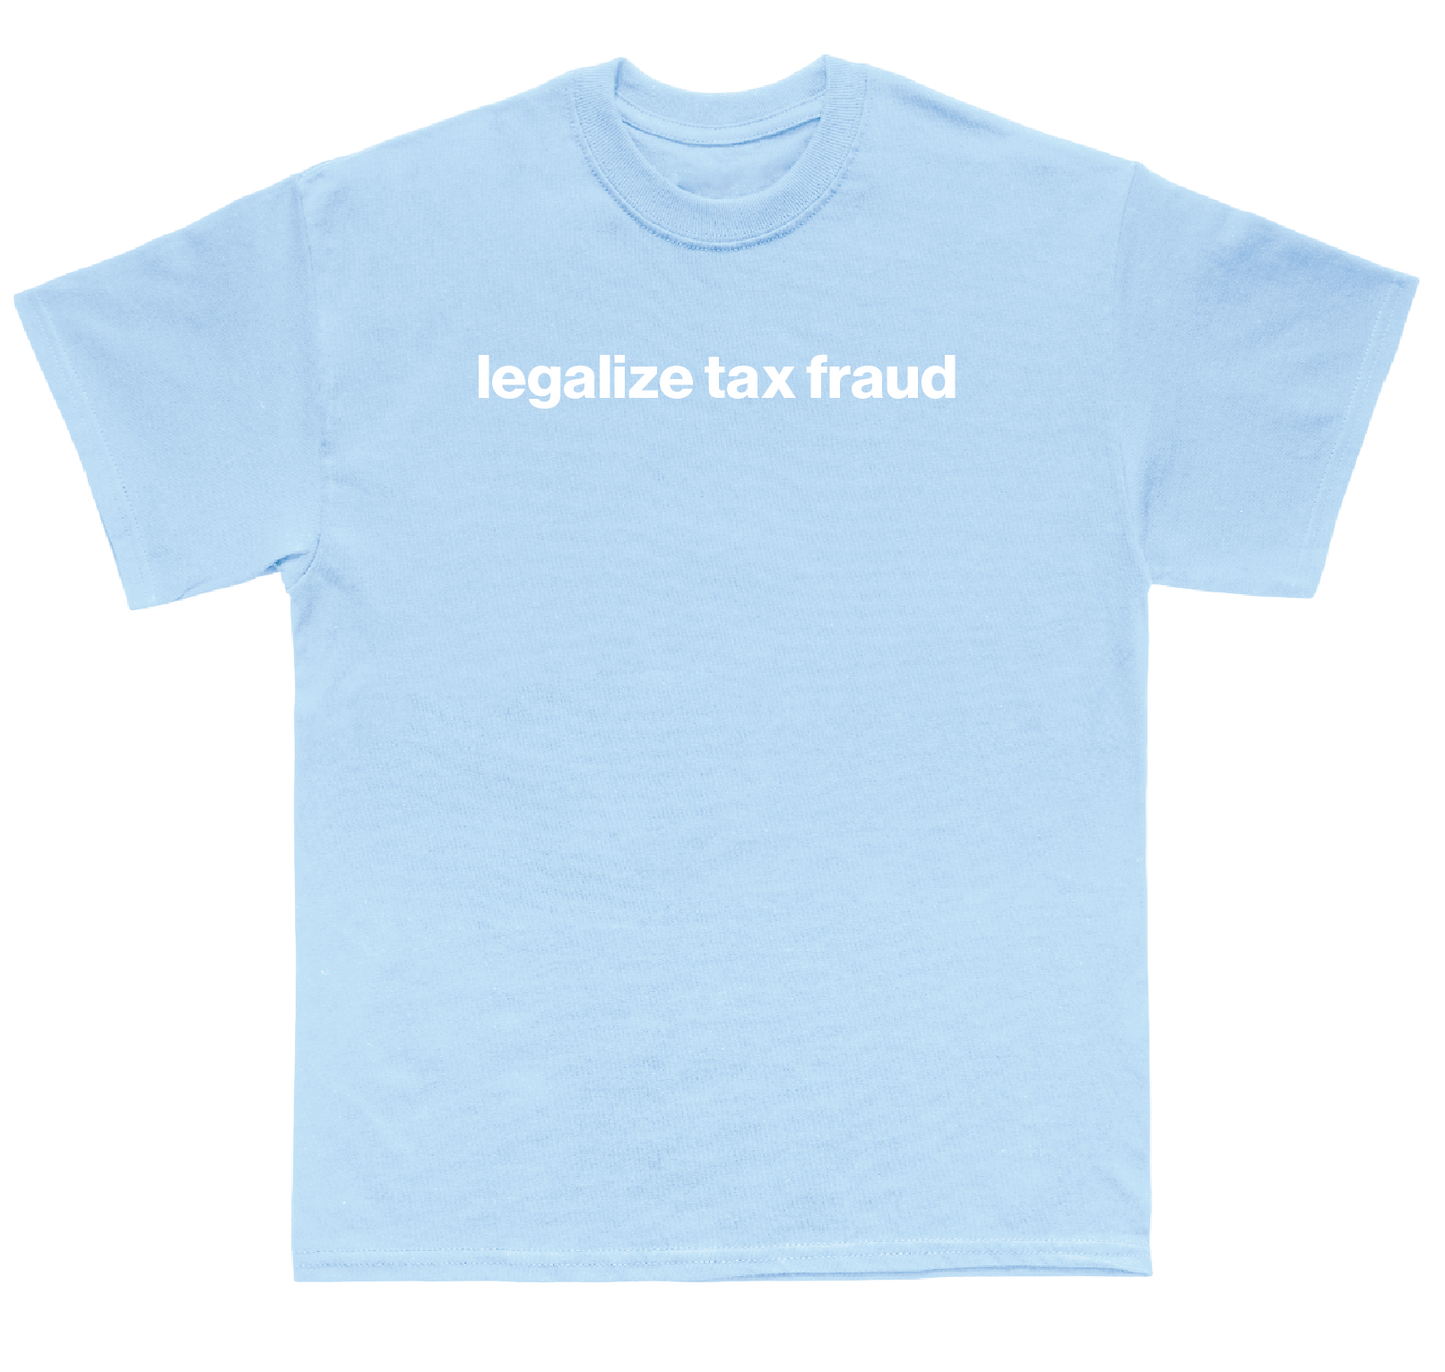 legalize tax fraud shirt